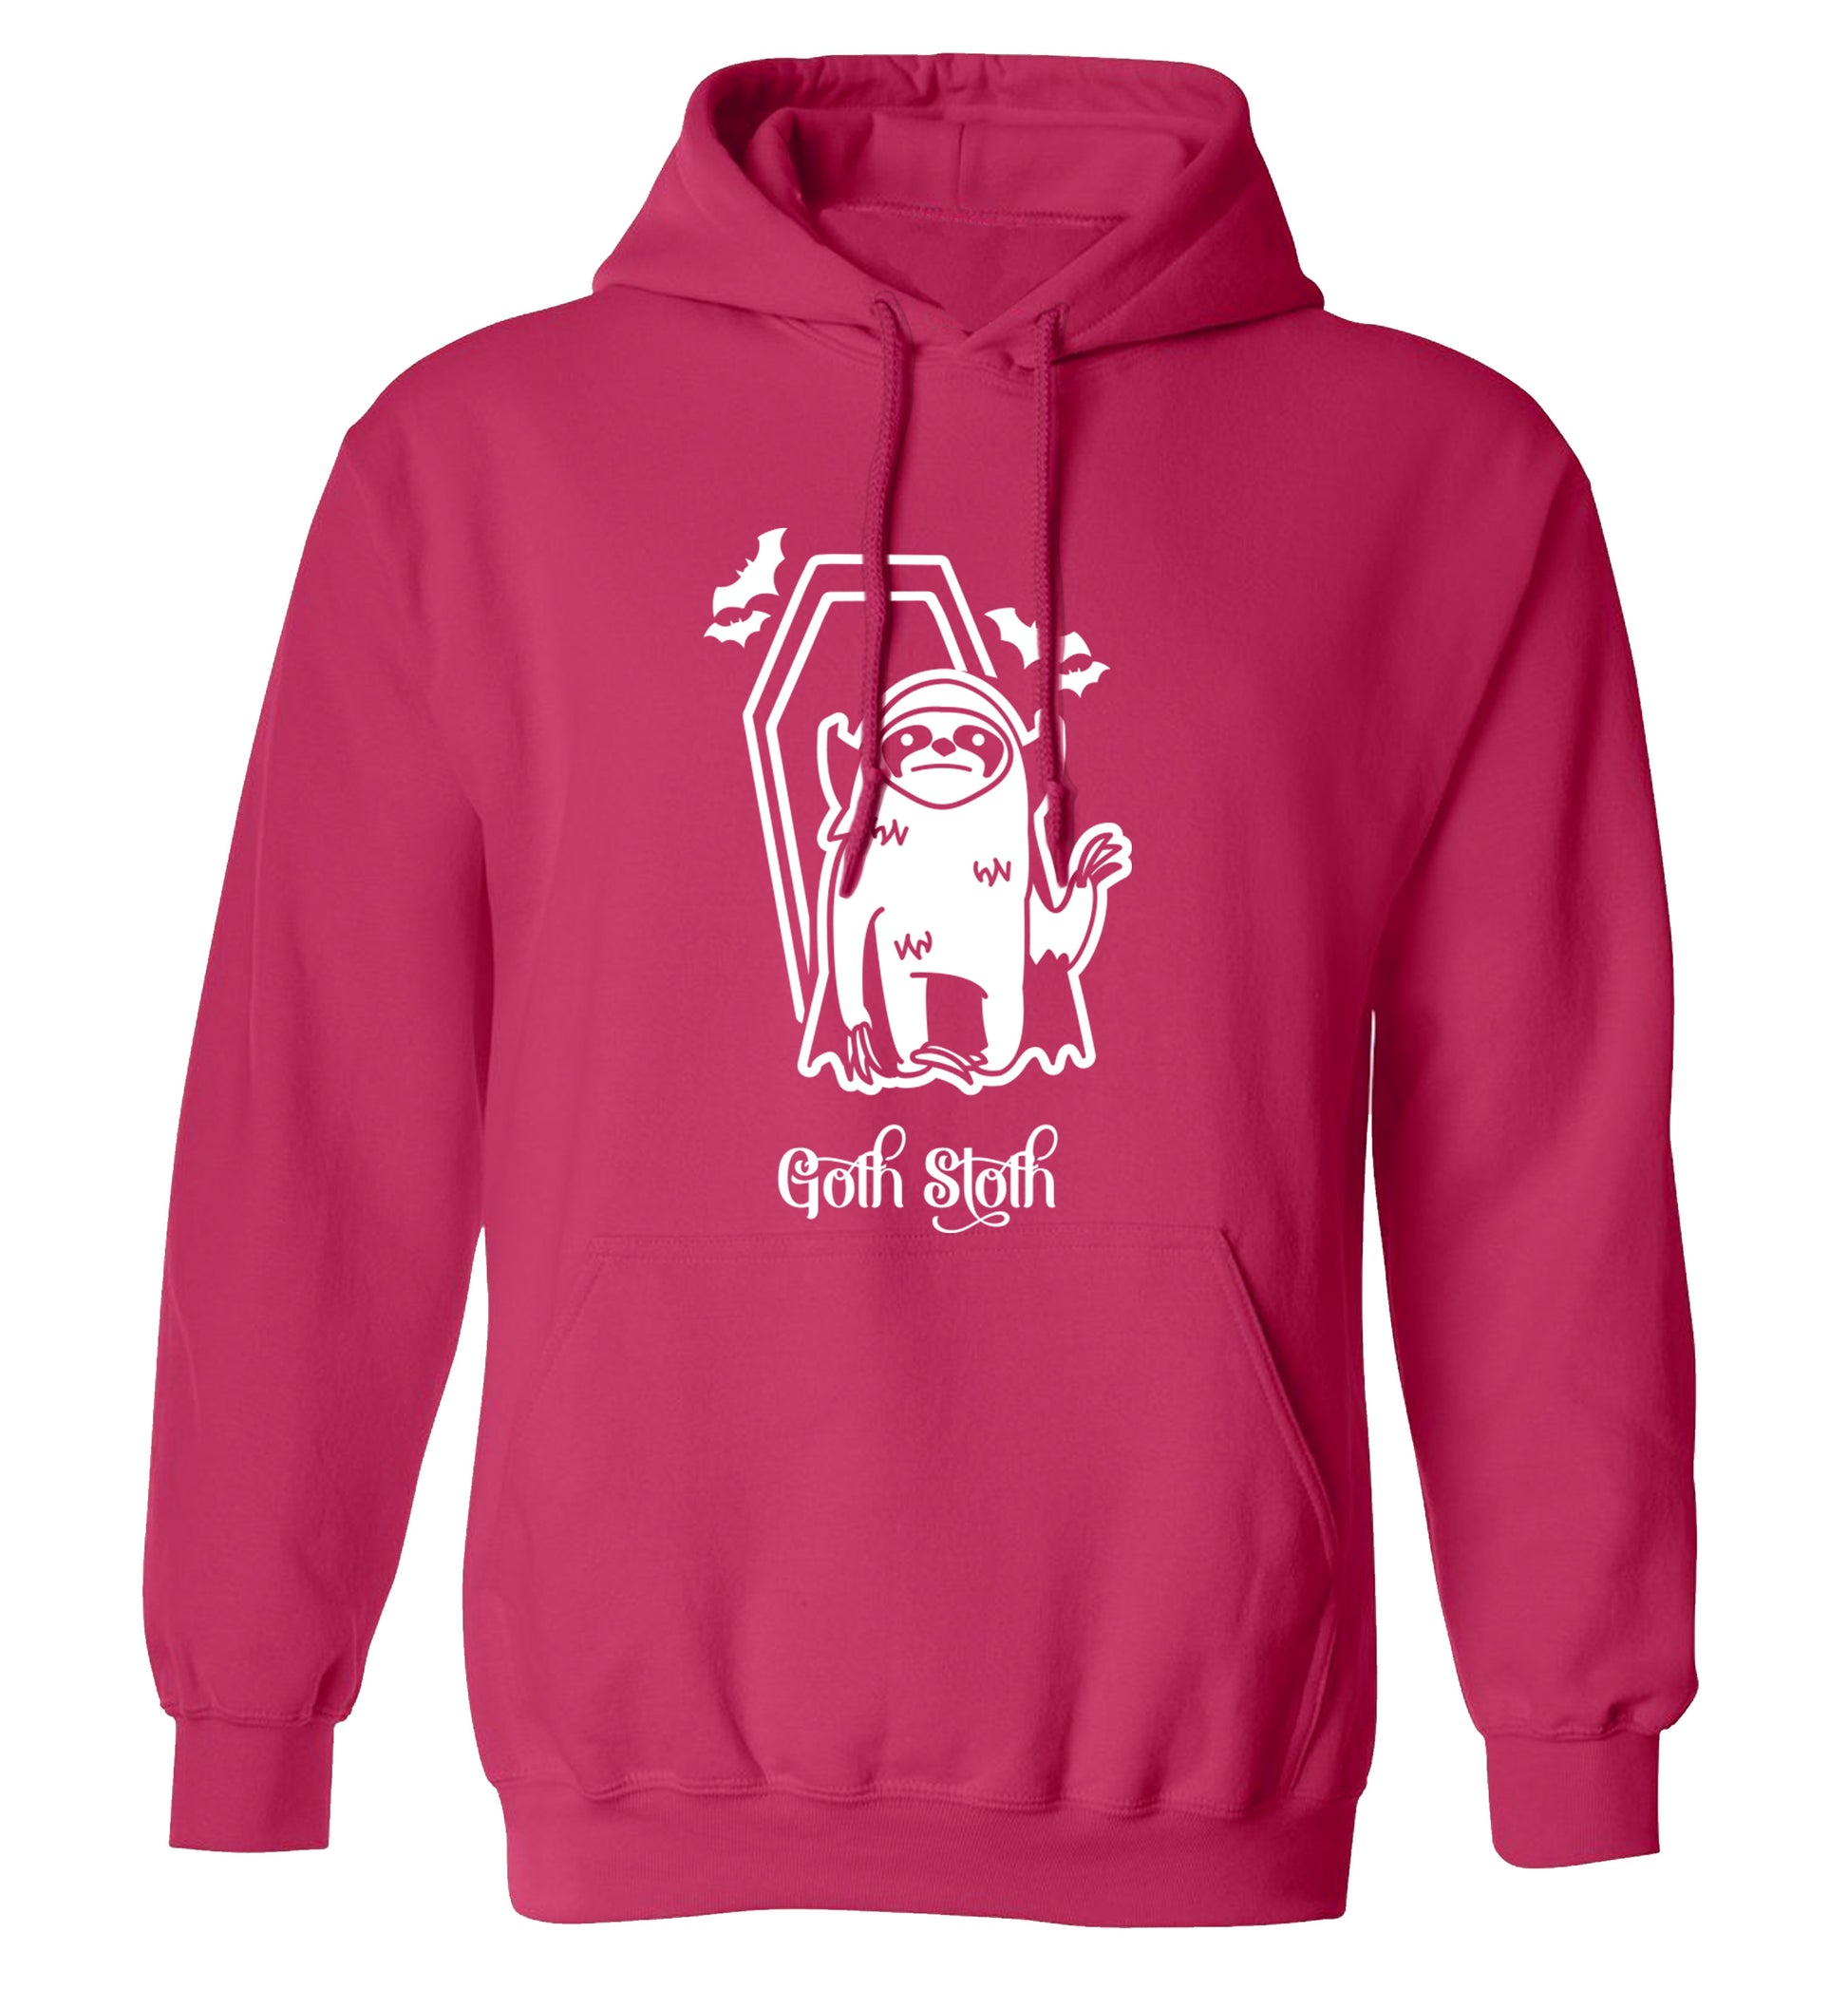 Goth Sloth adults unisex pink hoodie 2XL